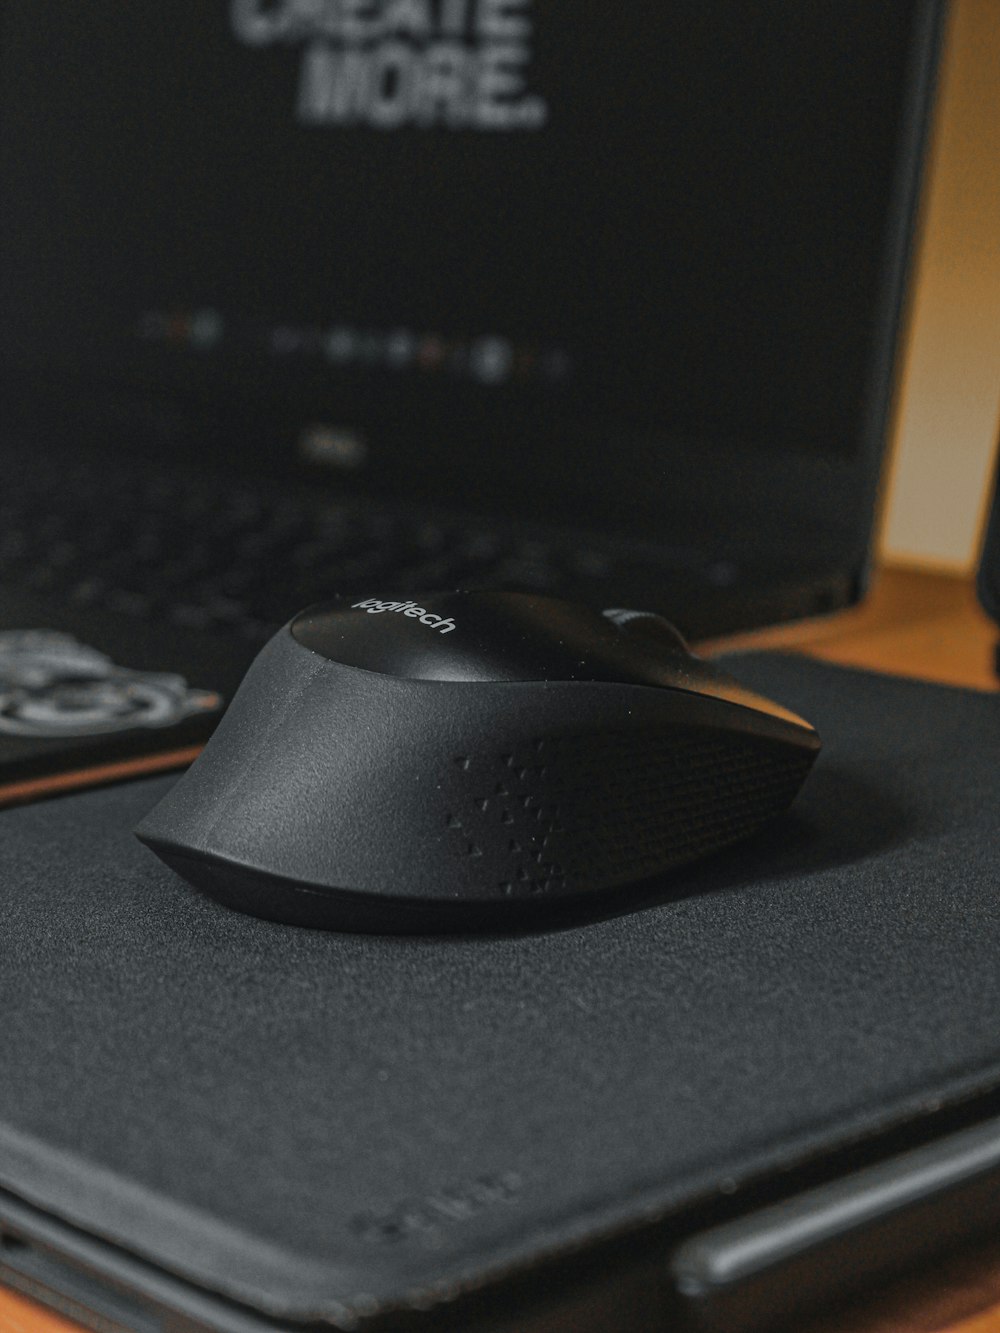 black logitech cordless computer mouse on black mouse pad